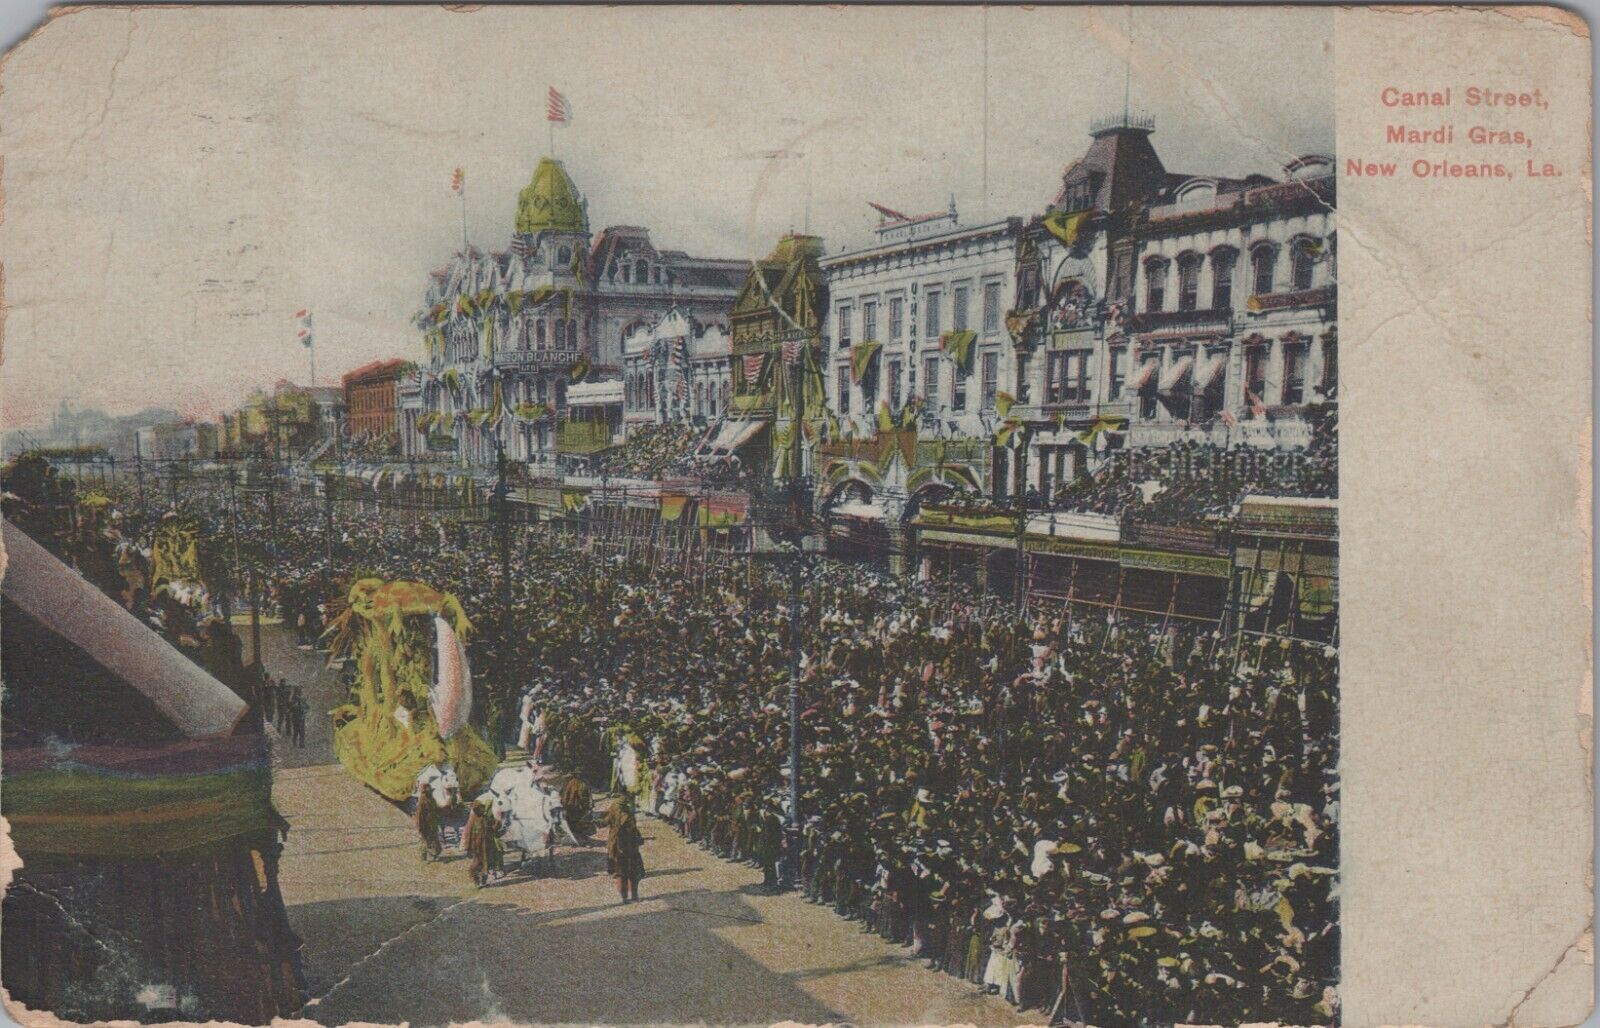 1909 Postcard New Orleans, Louisiana Canal Street Mardi Gras Parade 4923